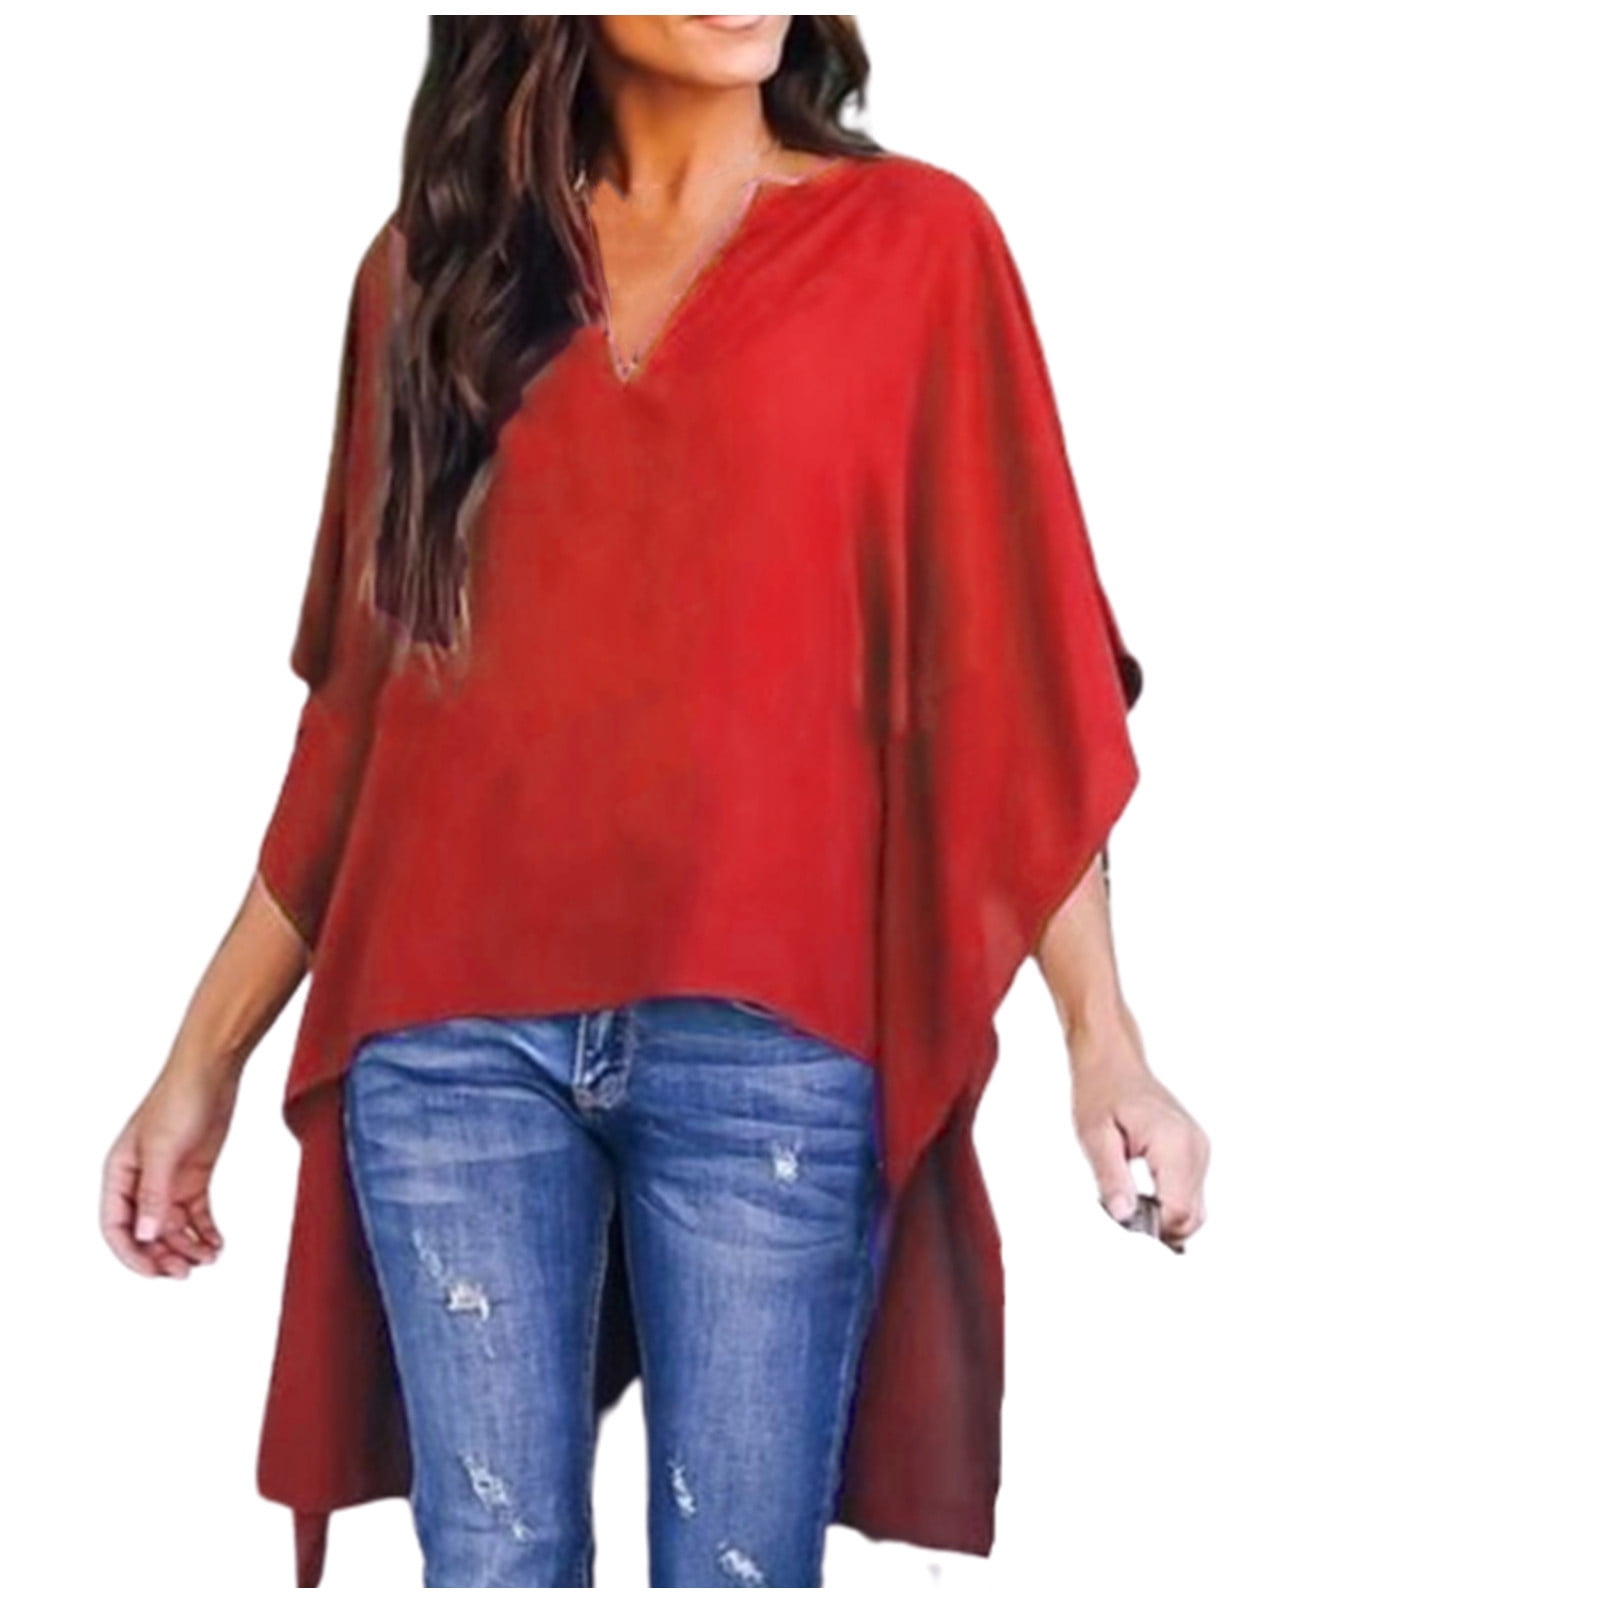 HAPIMO Sales Womens Fall Fashion Jacket Oblique Zipper Color Block Pockets  Long Sleeve Drawstring Tops Red L 